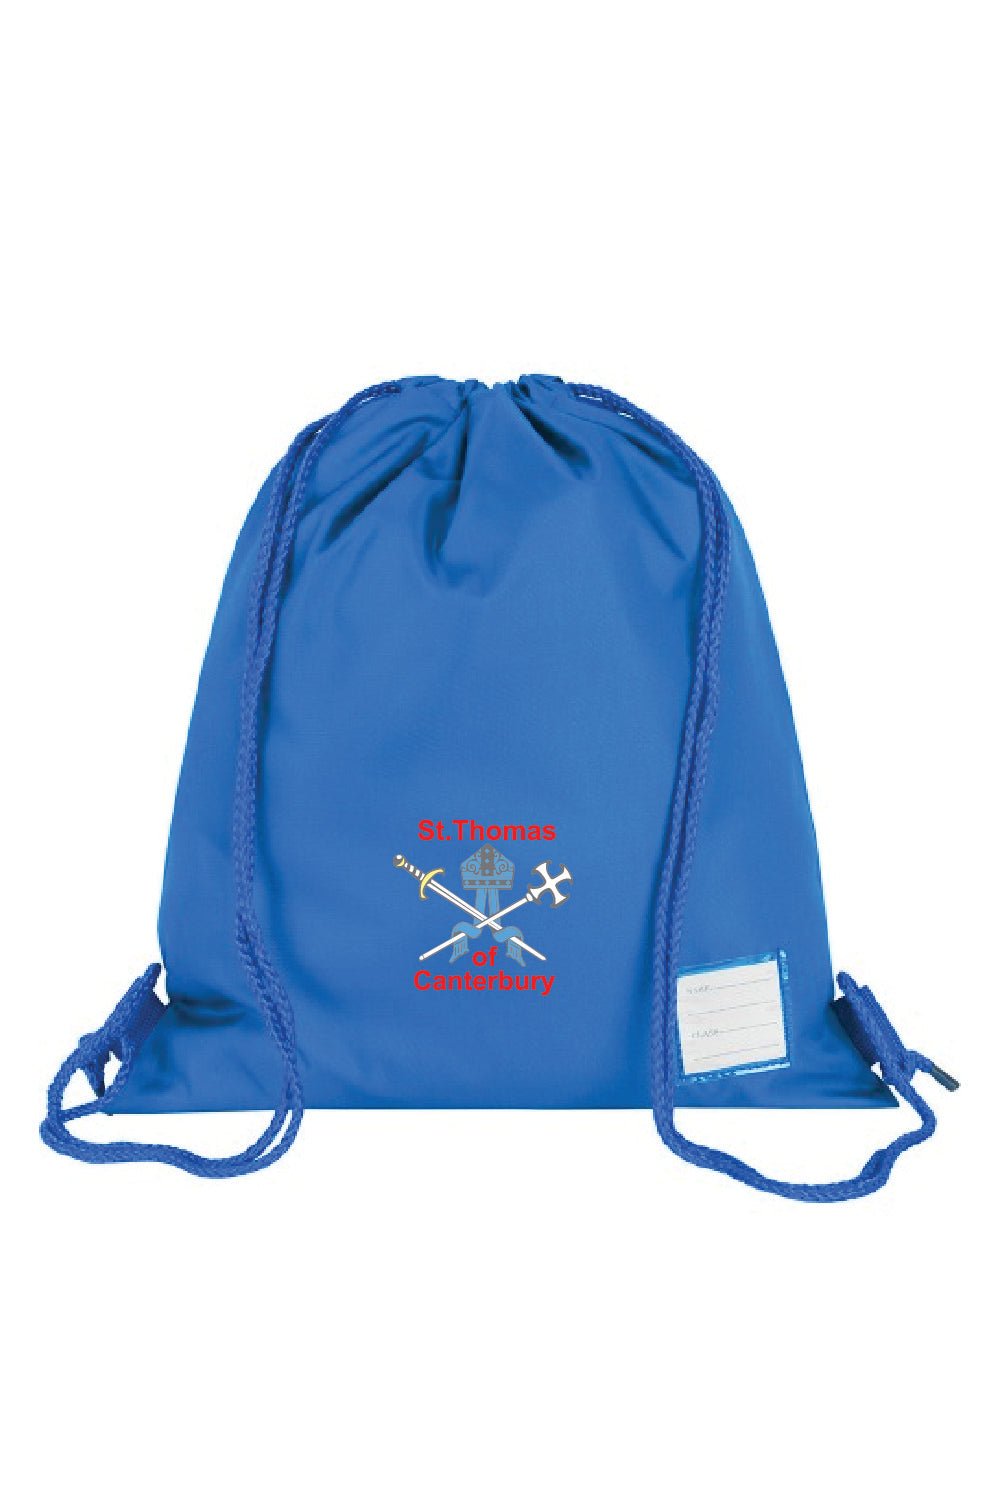 St Thomas PE bag with personalisation - Uniformwise Schoolwear